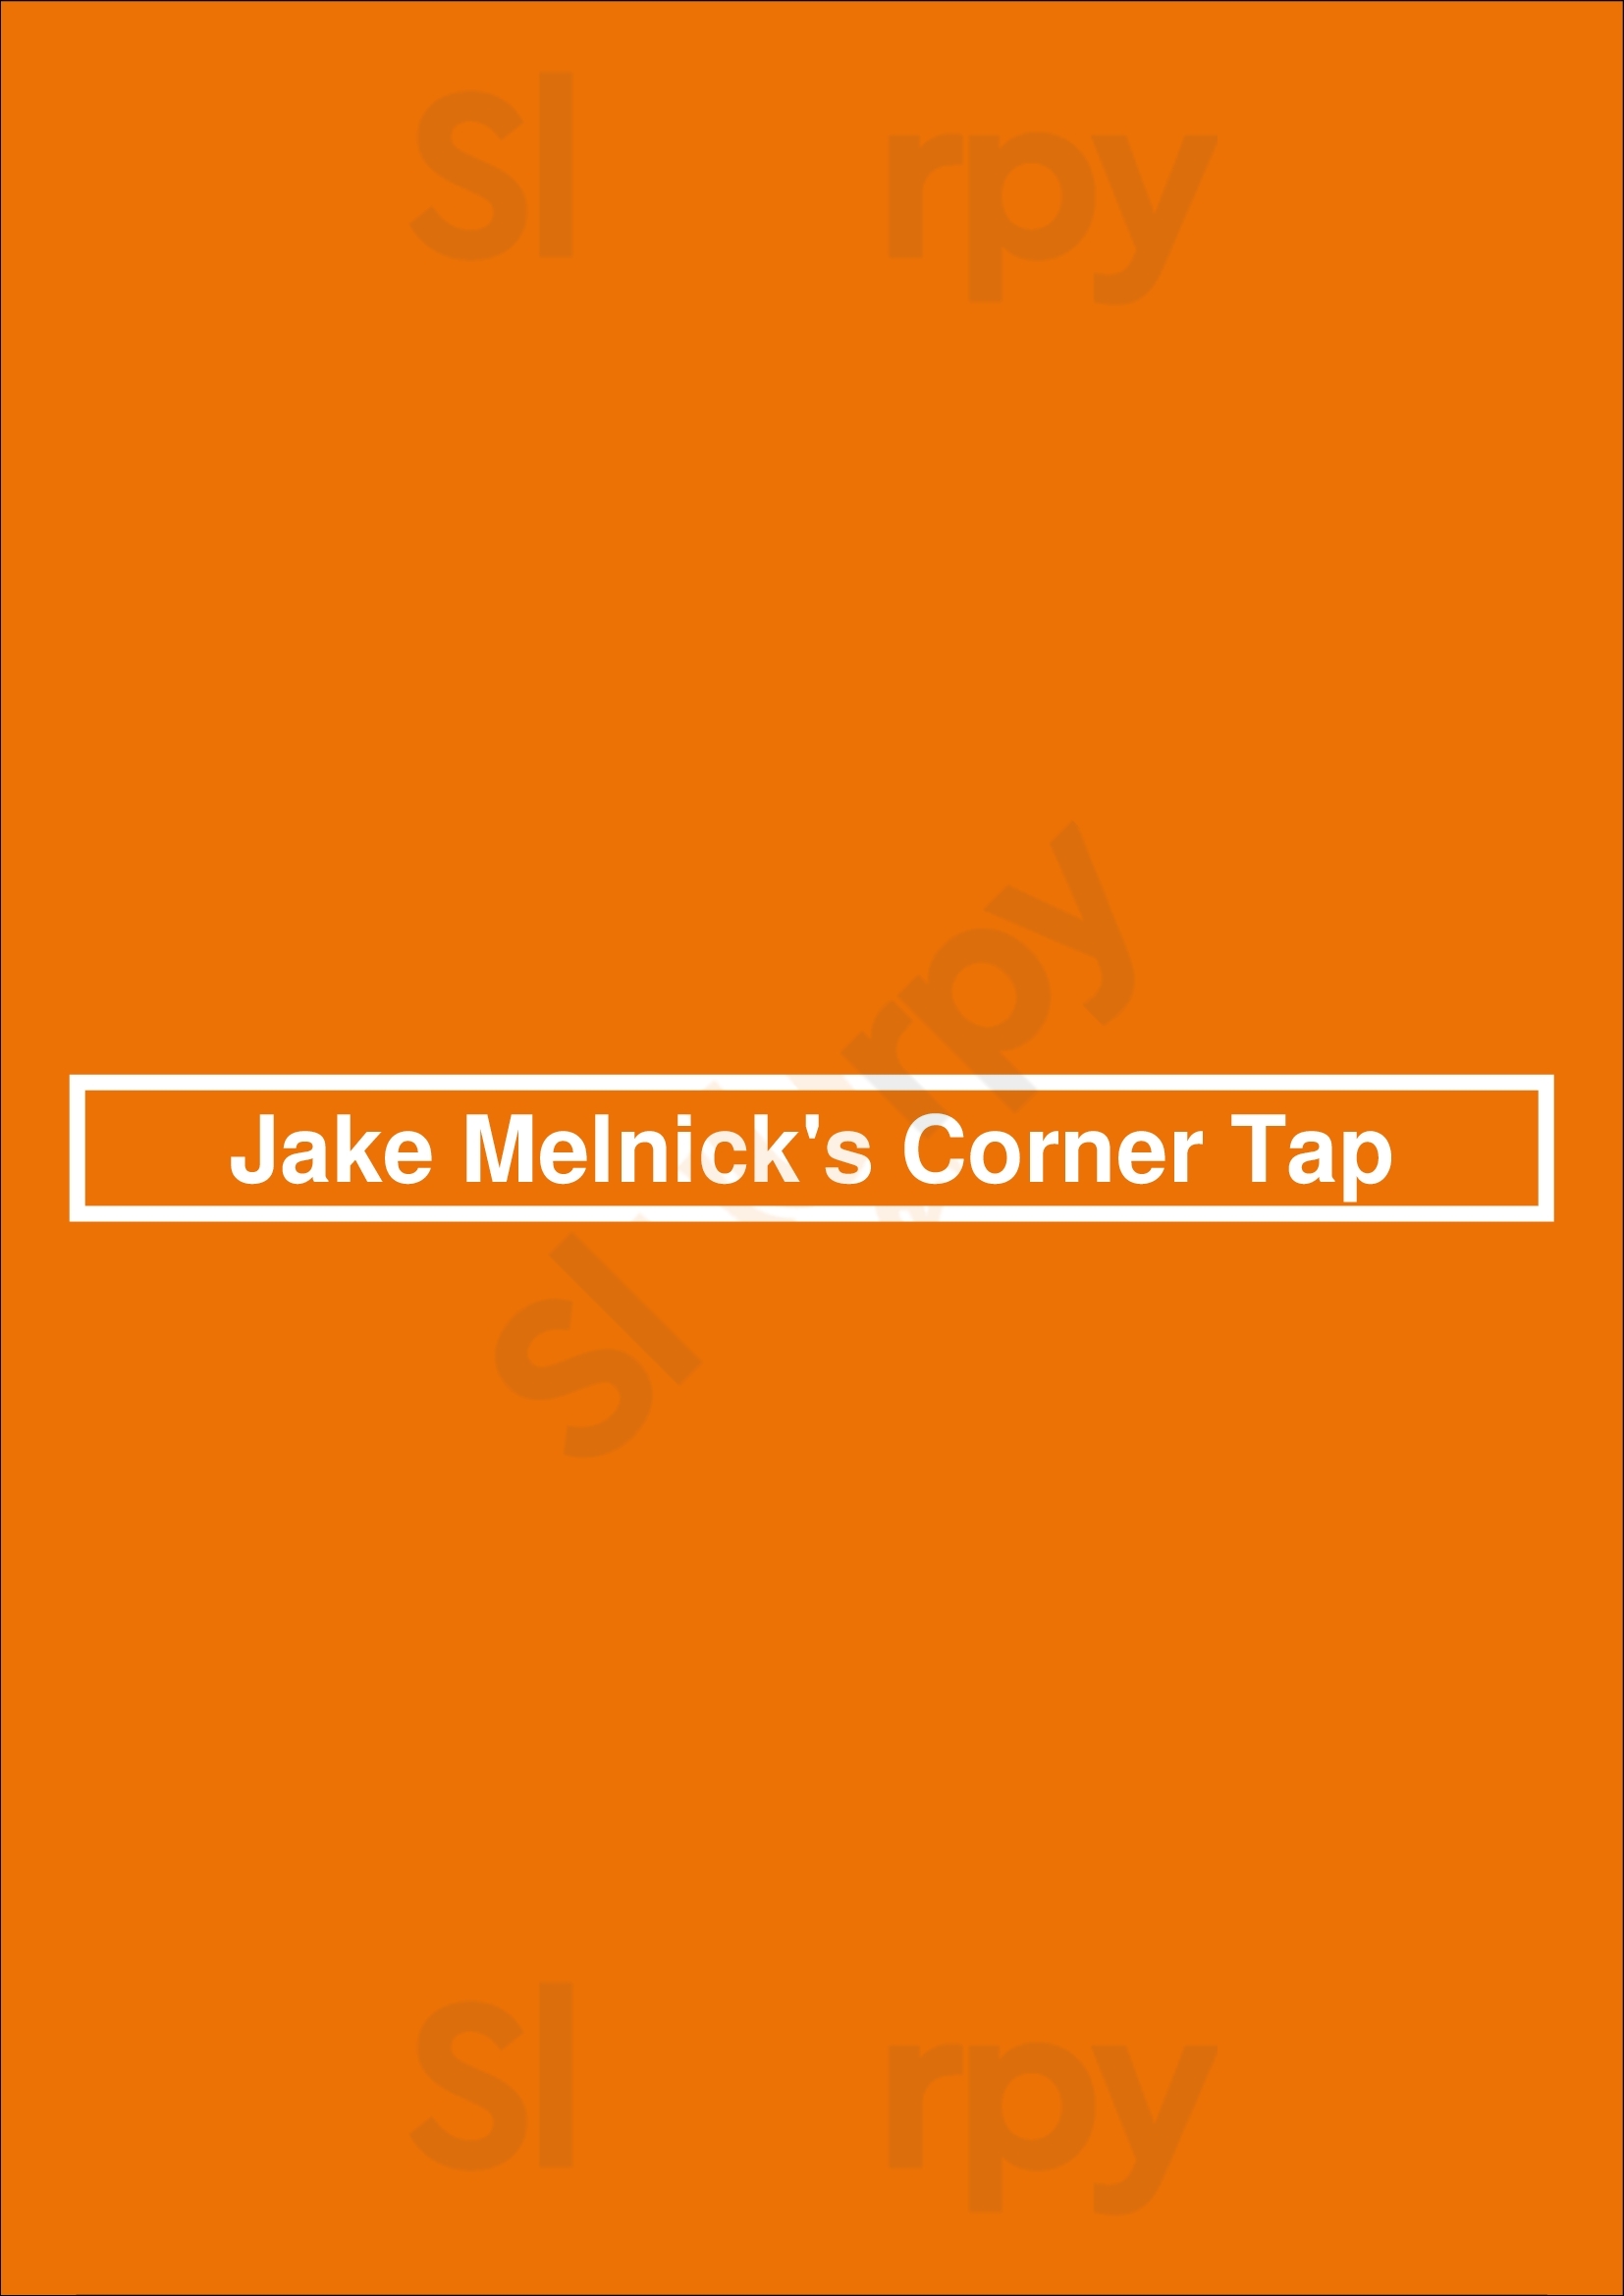 Jake Melnick's Corner Tap Chicago Menu - 1